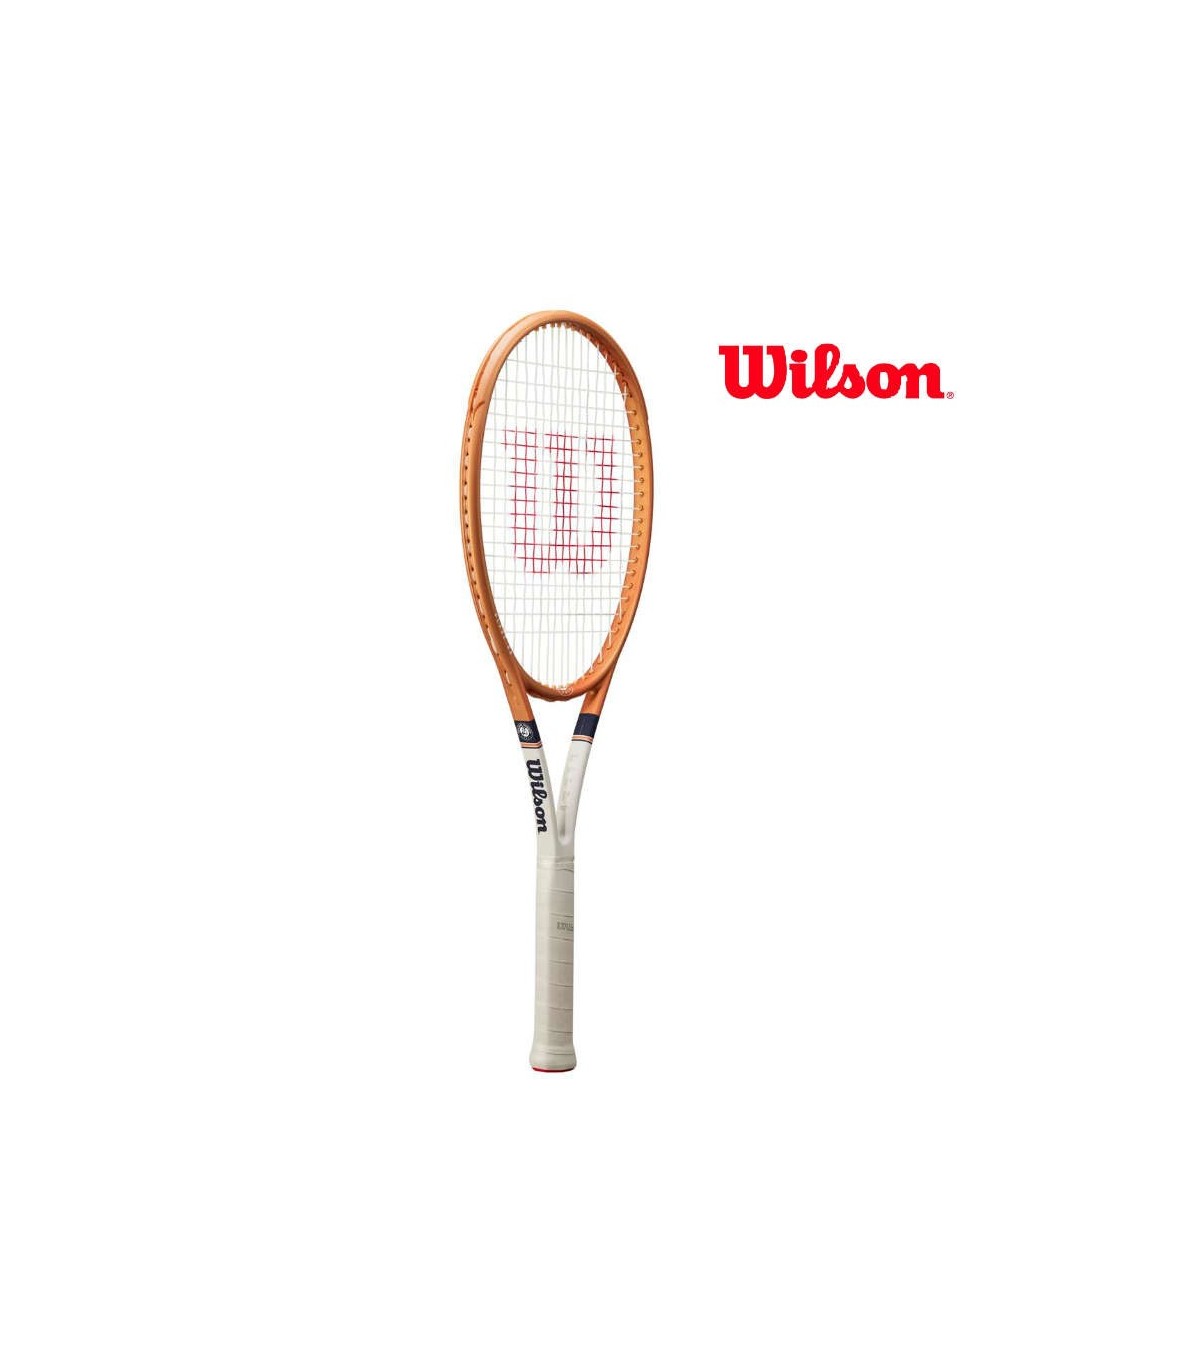 Wilson Blade 98 16x19 v7 Roland Garros Tennis Racquet 4 1/4 Racket LTD EDITION 